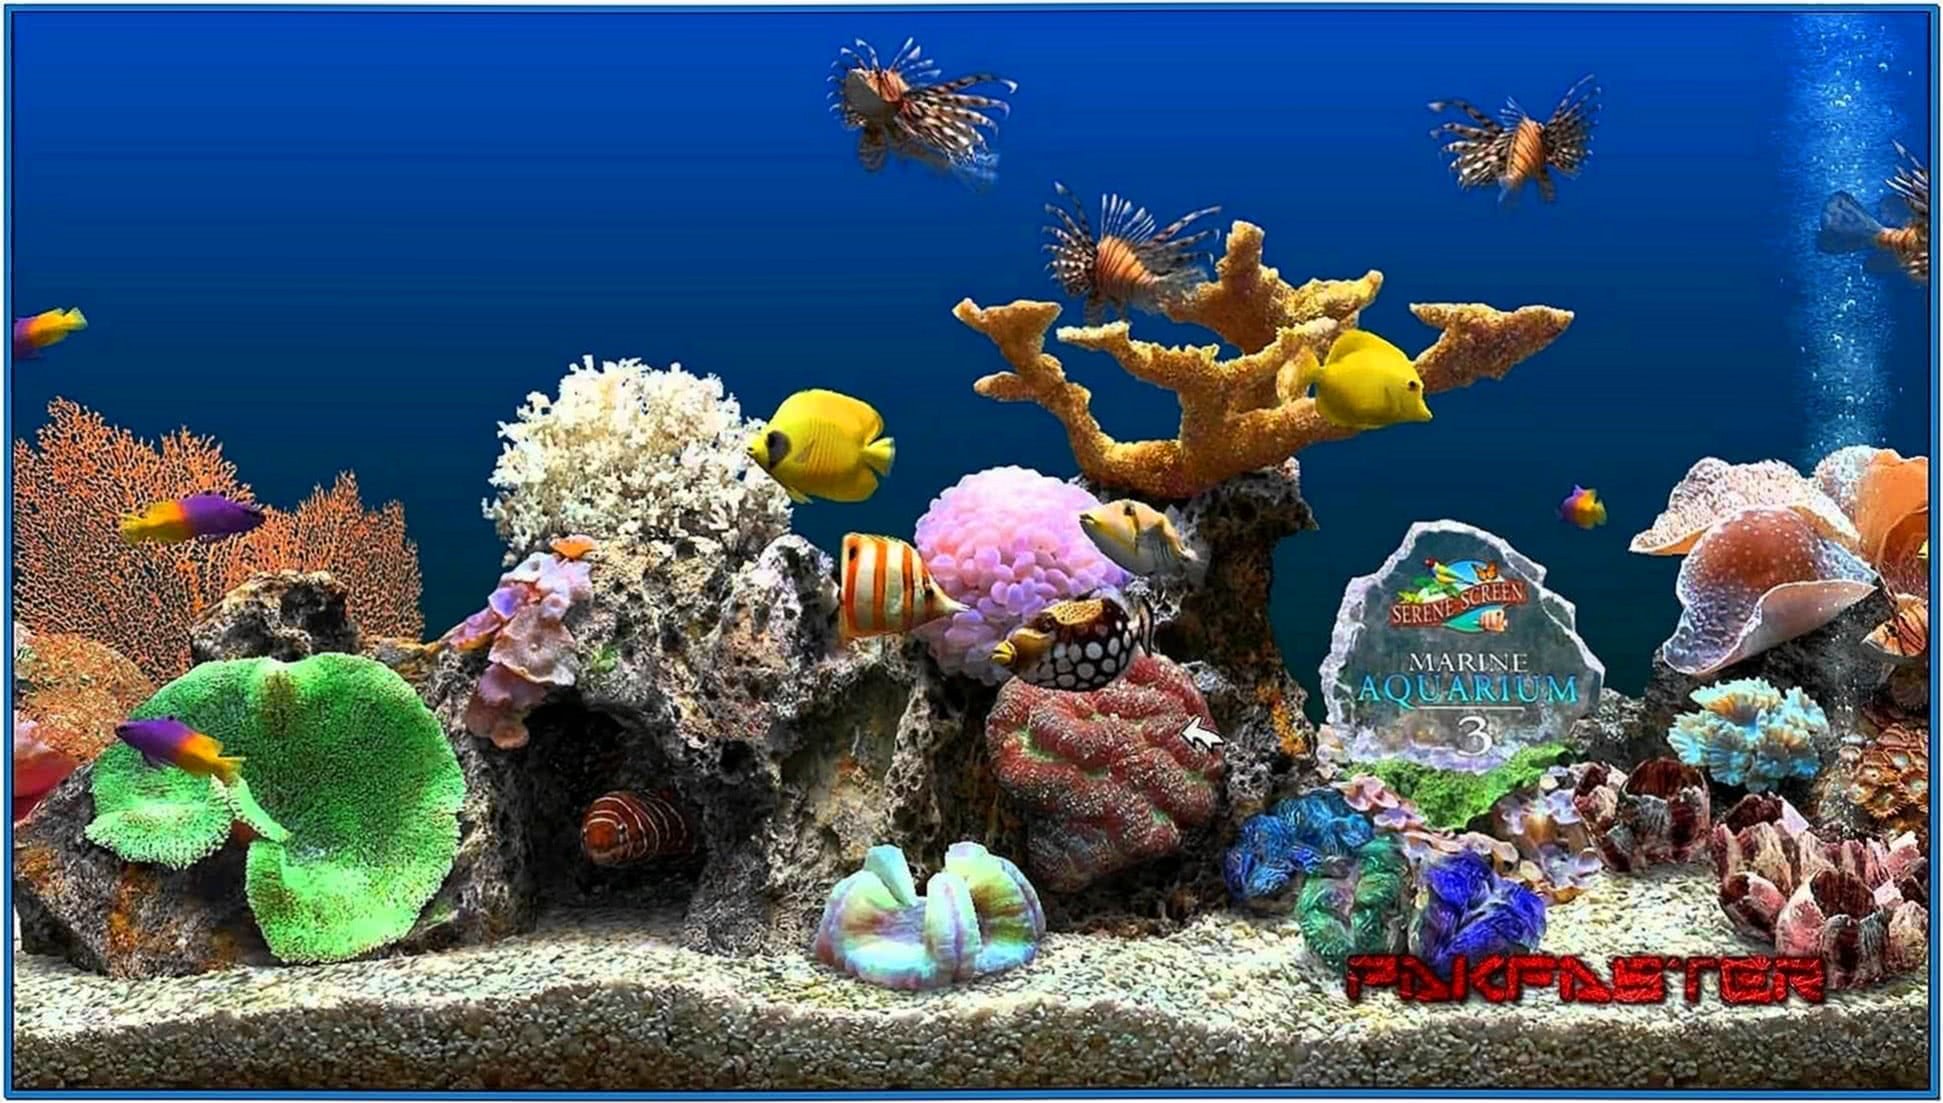 Marine aquarium 3 screensaver keycode - Download free